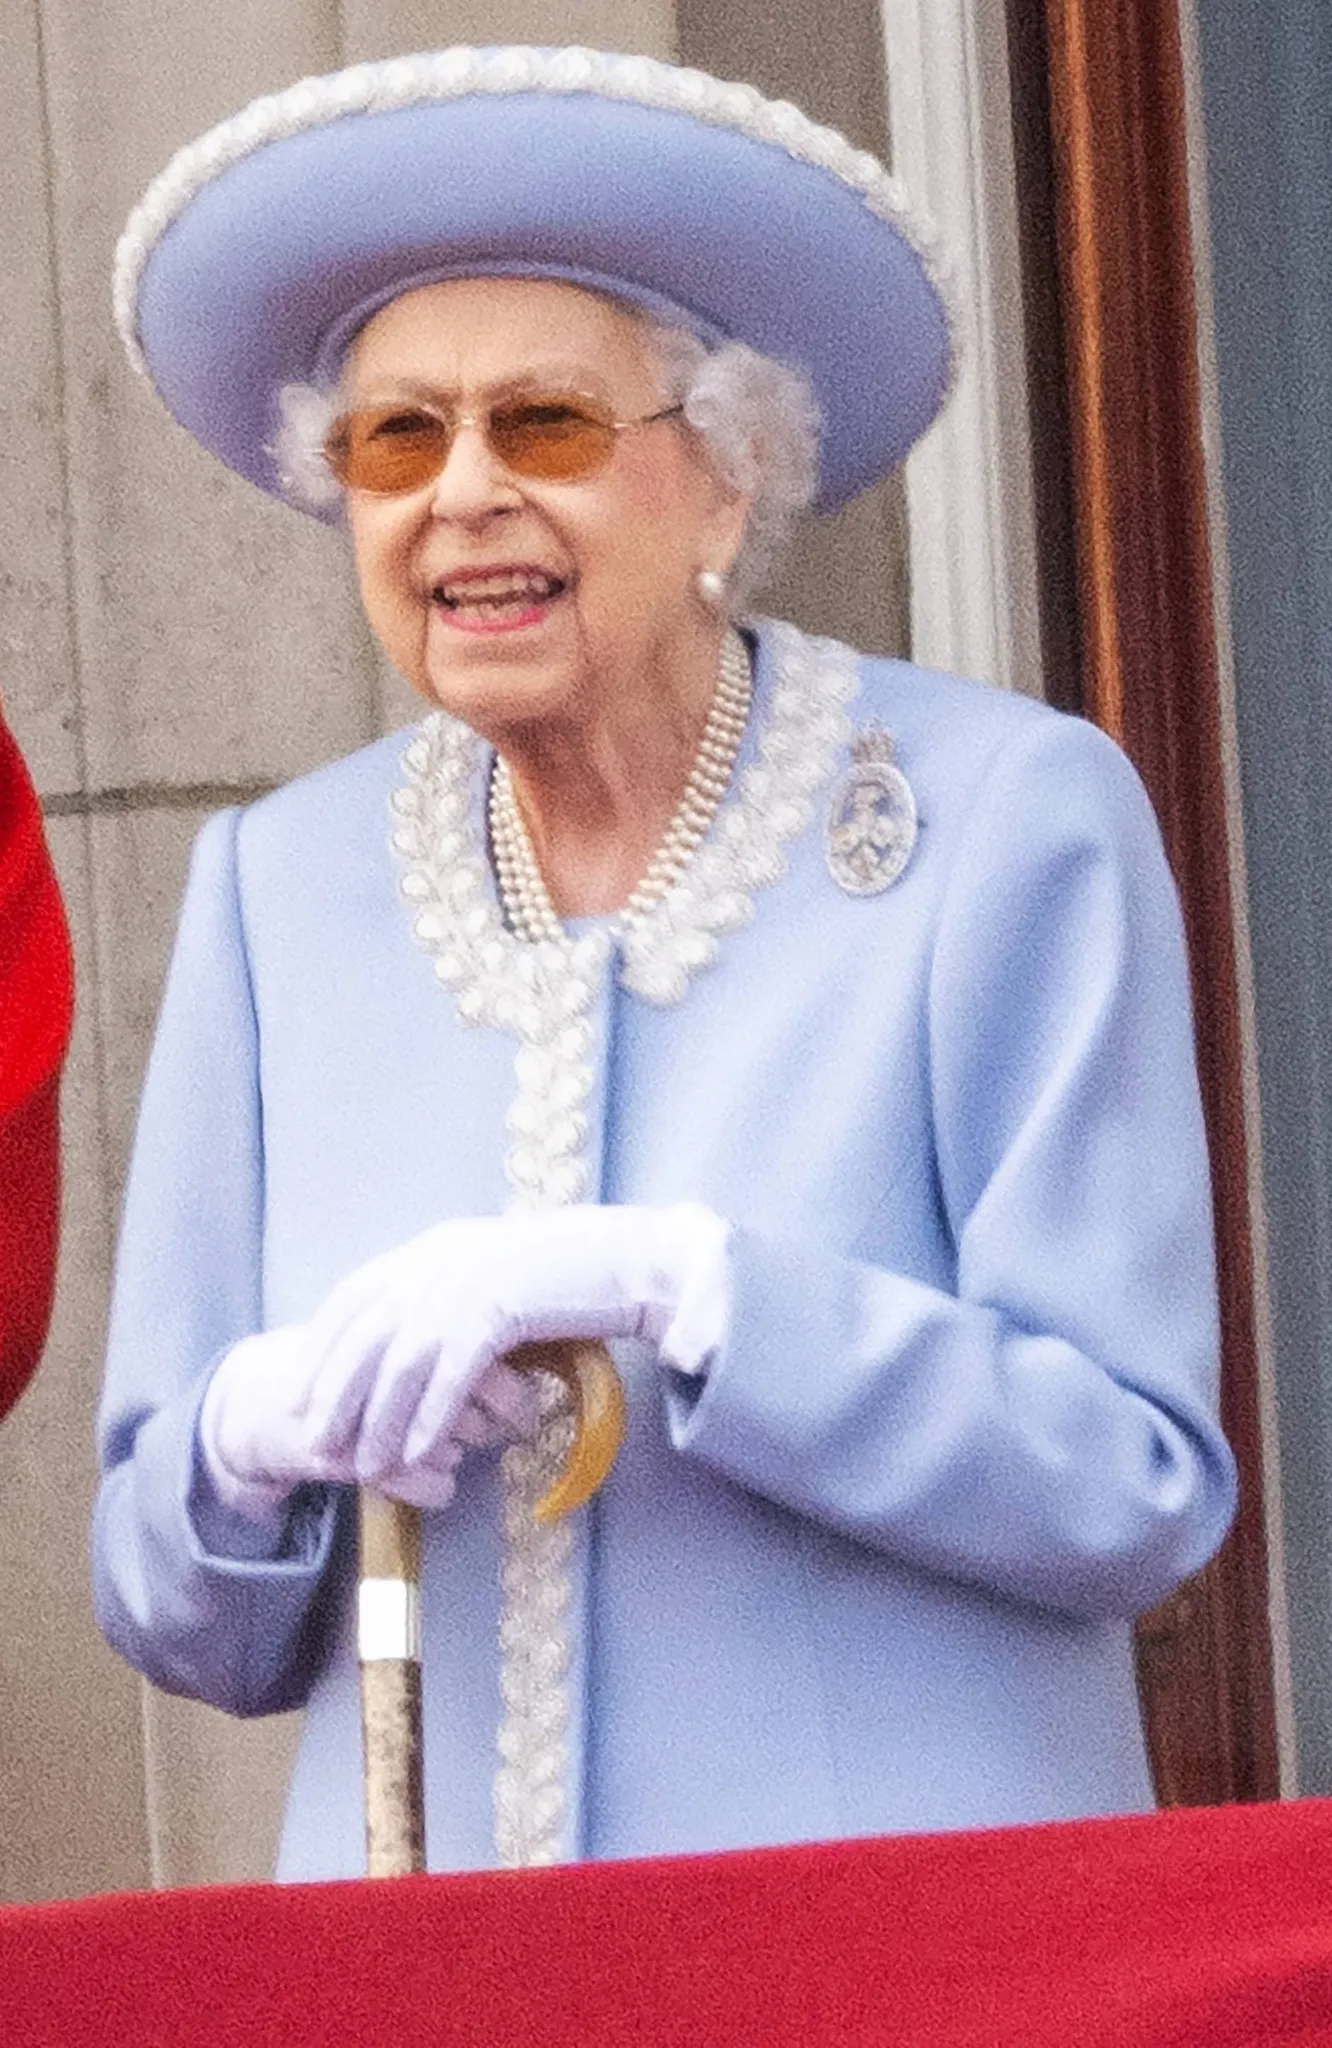 Queen Elizabeth II has died. She was 96 years old